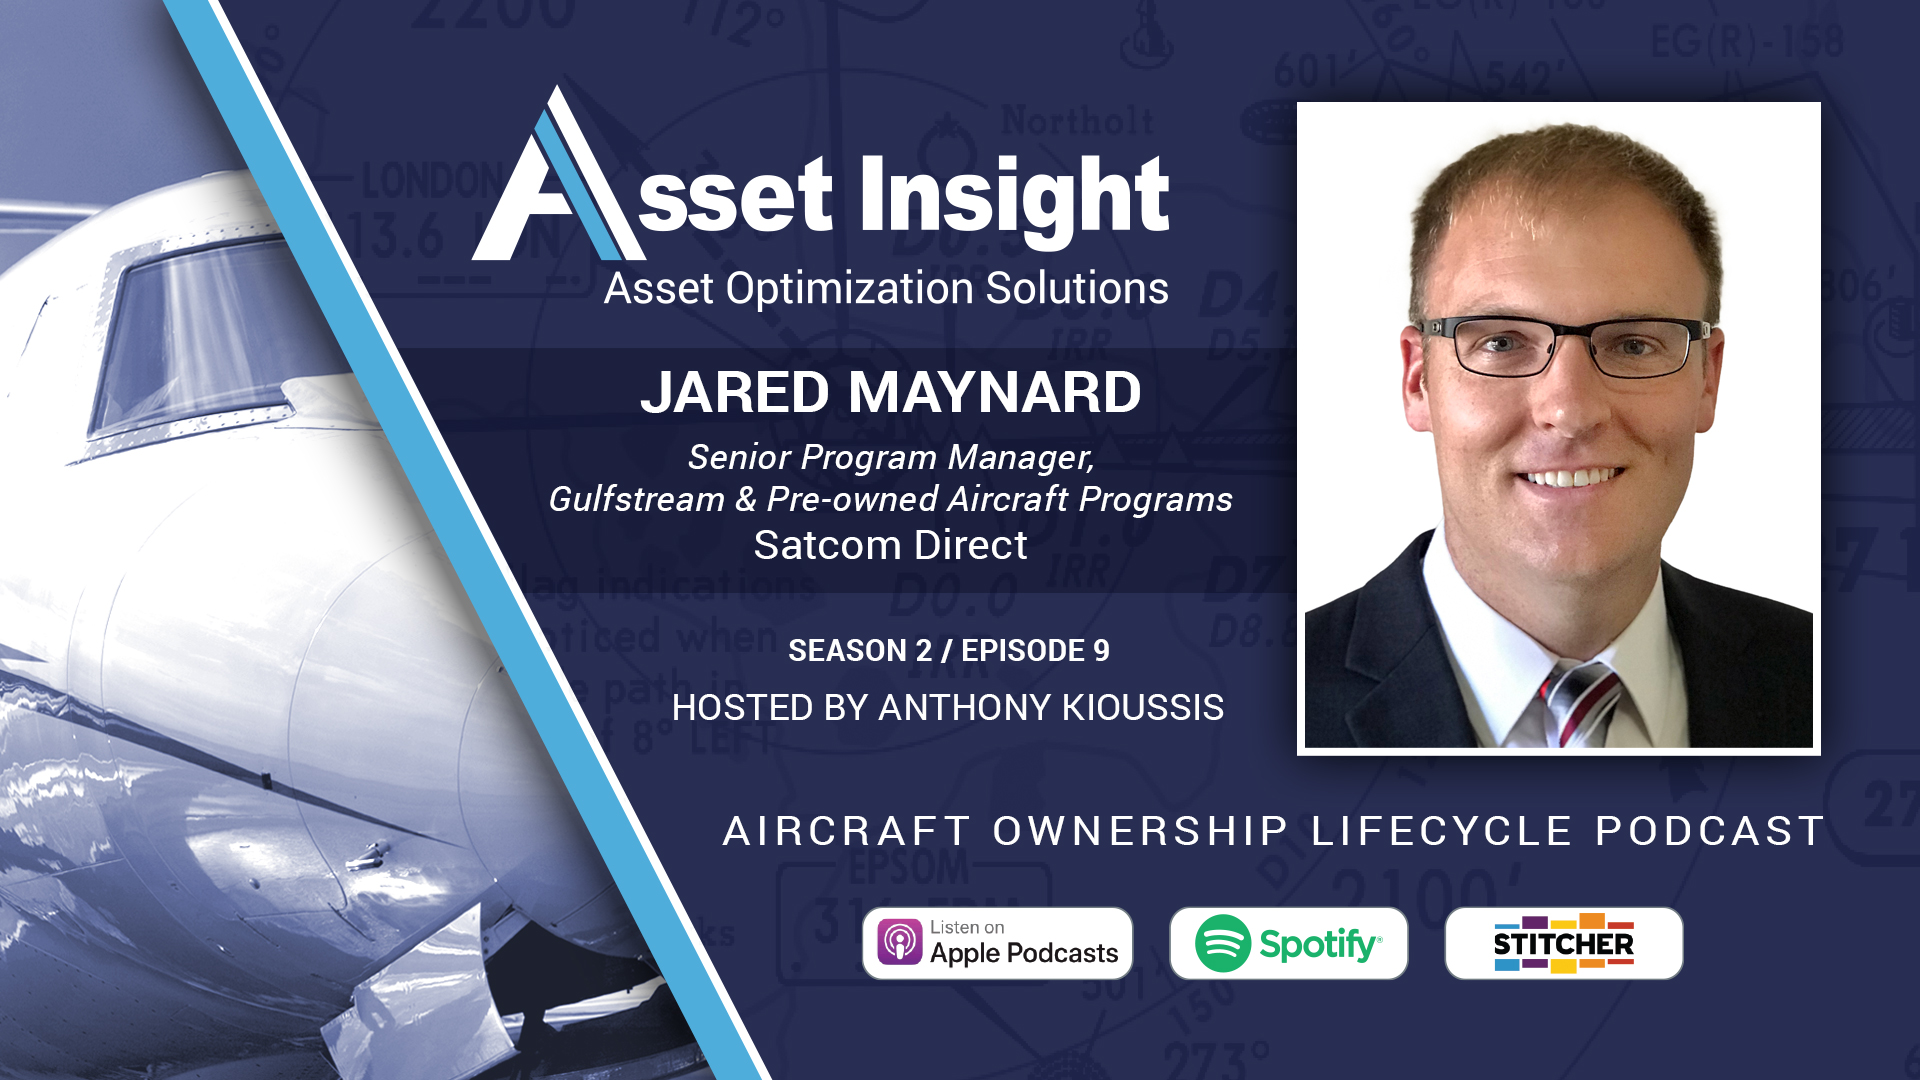 Jared Maynard - Senior Program Manager, Gulfstream & Pre-owned Aircraft Programs, Satcom Direct